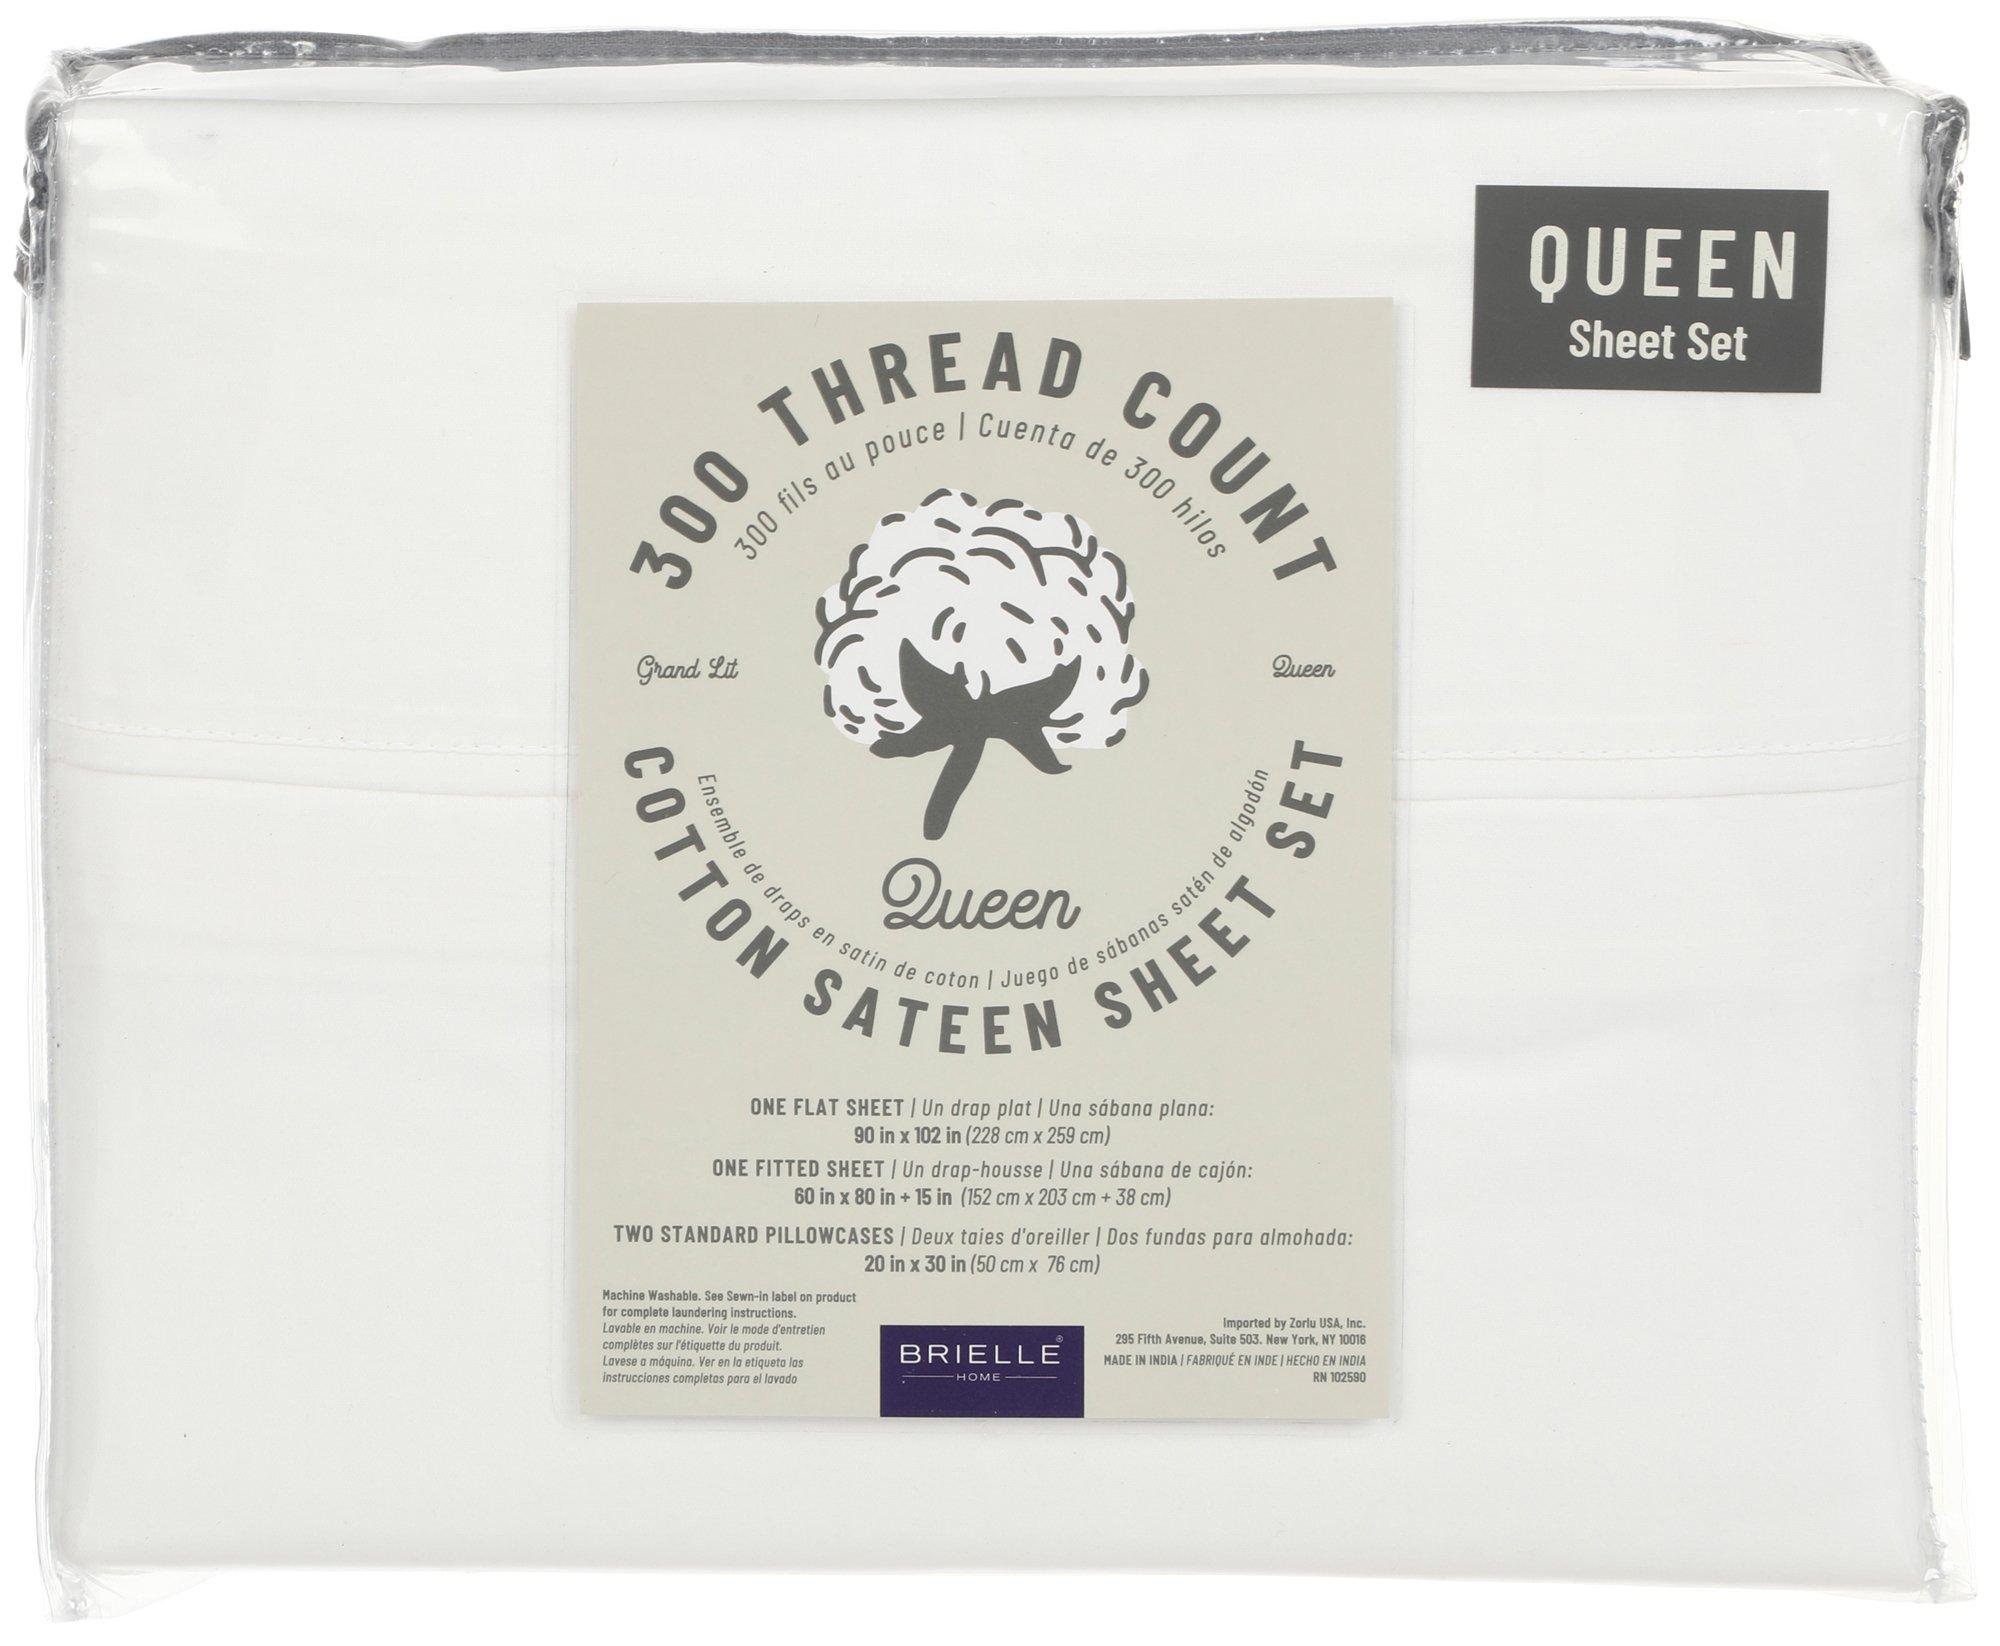 Queen Sized 4 Pc Sheet Set